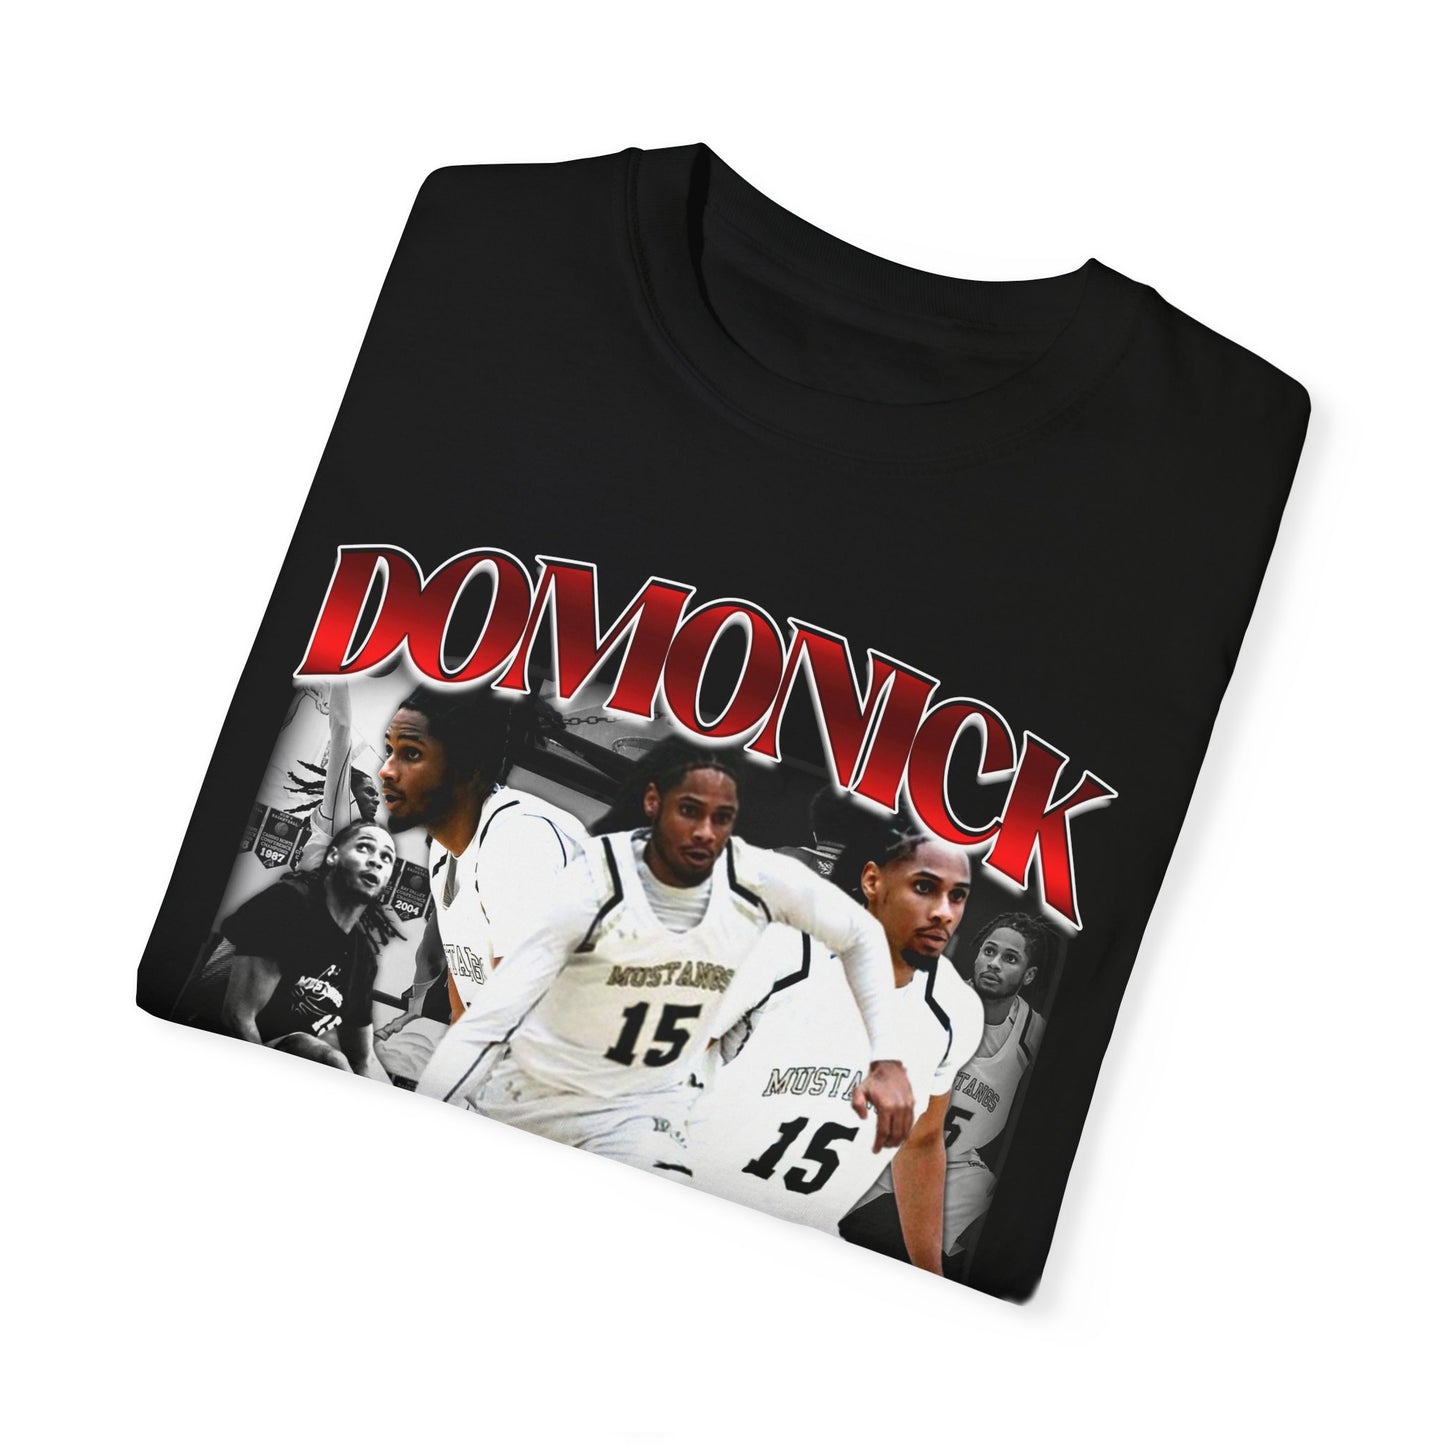 Domonick Victor Graphic T-shirt